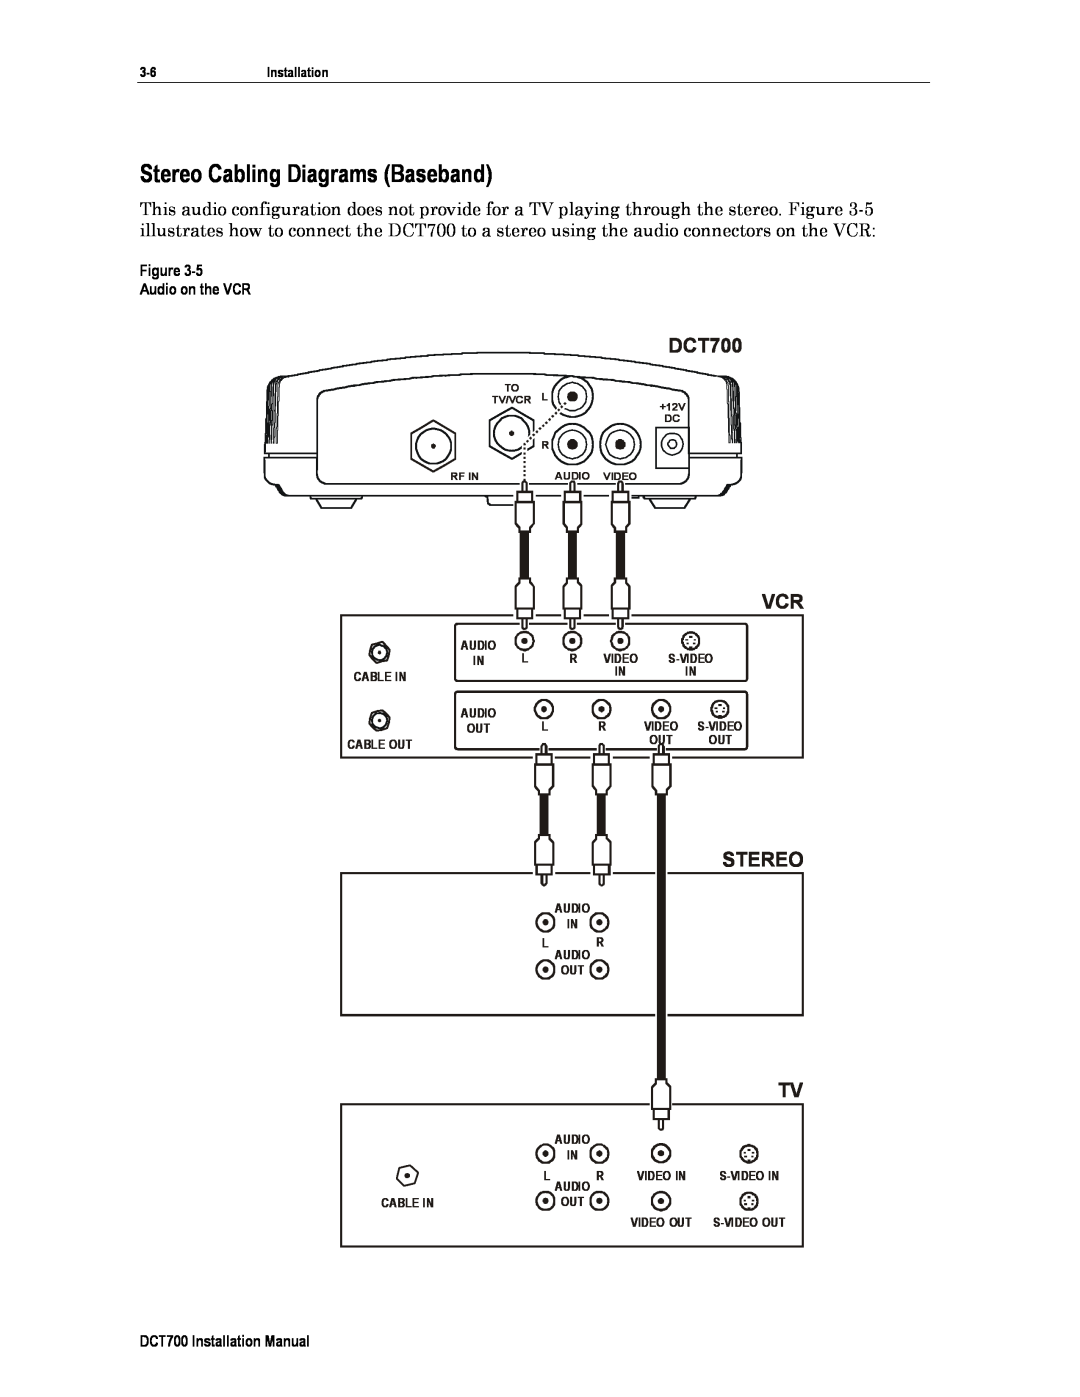 Motorola DTC700 installation manual Stereo Cabling Diagrams Baseband, DCT700 